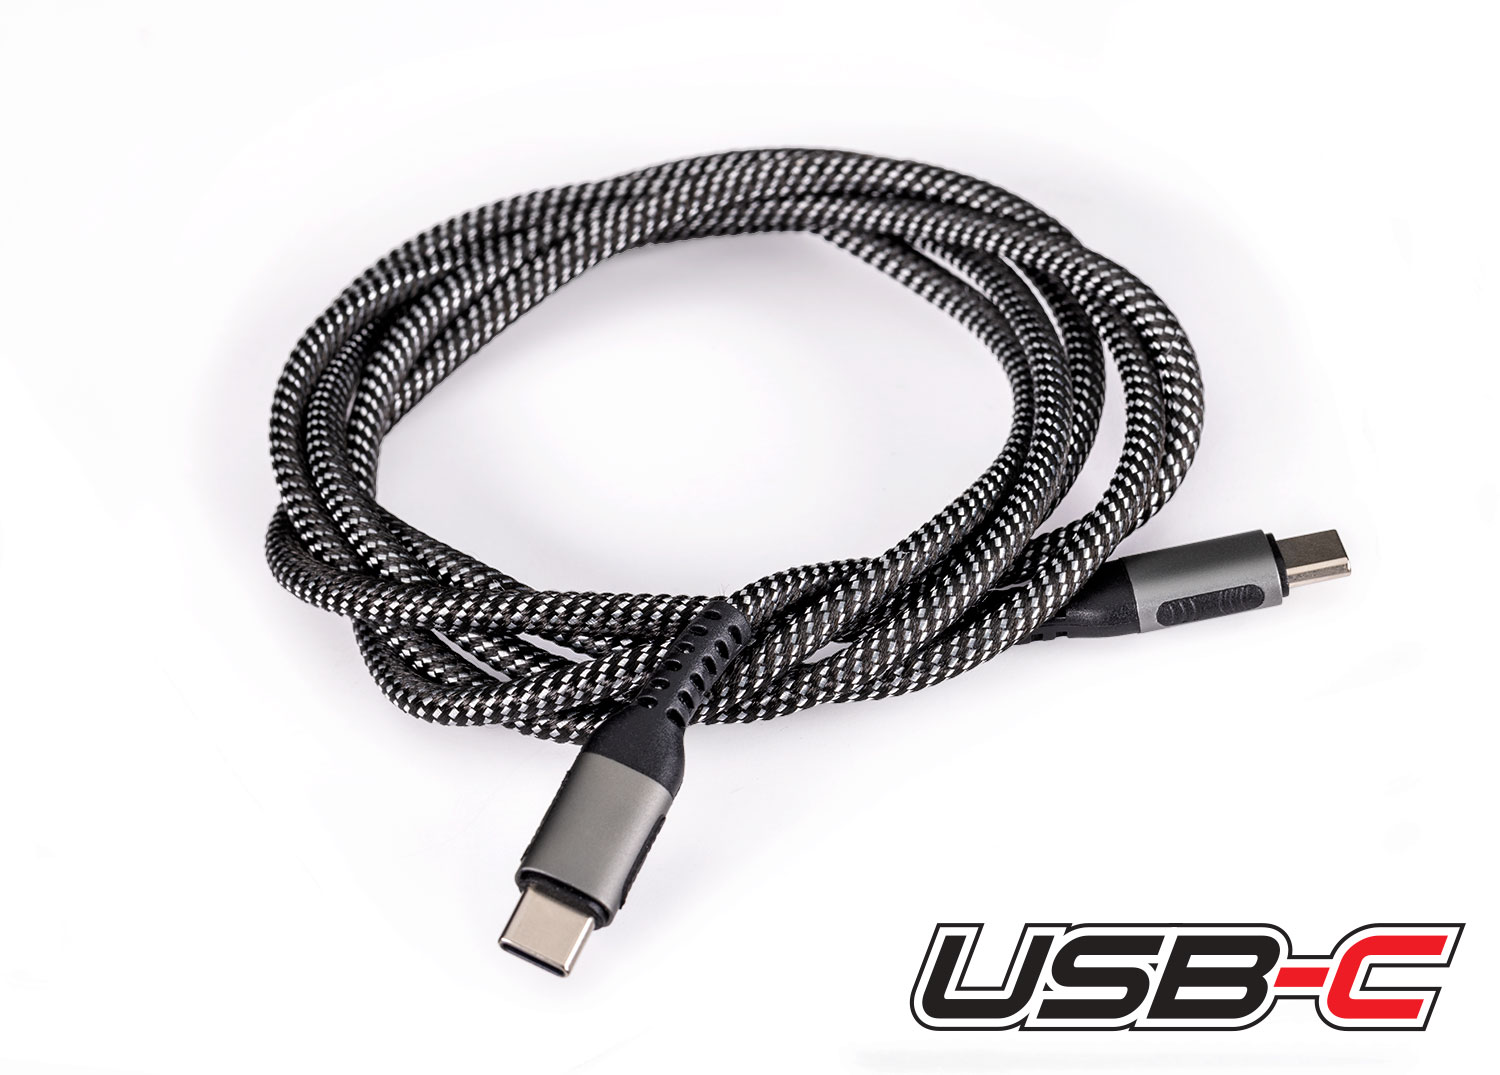 100-Watt USB-C Cable